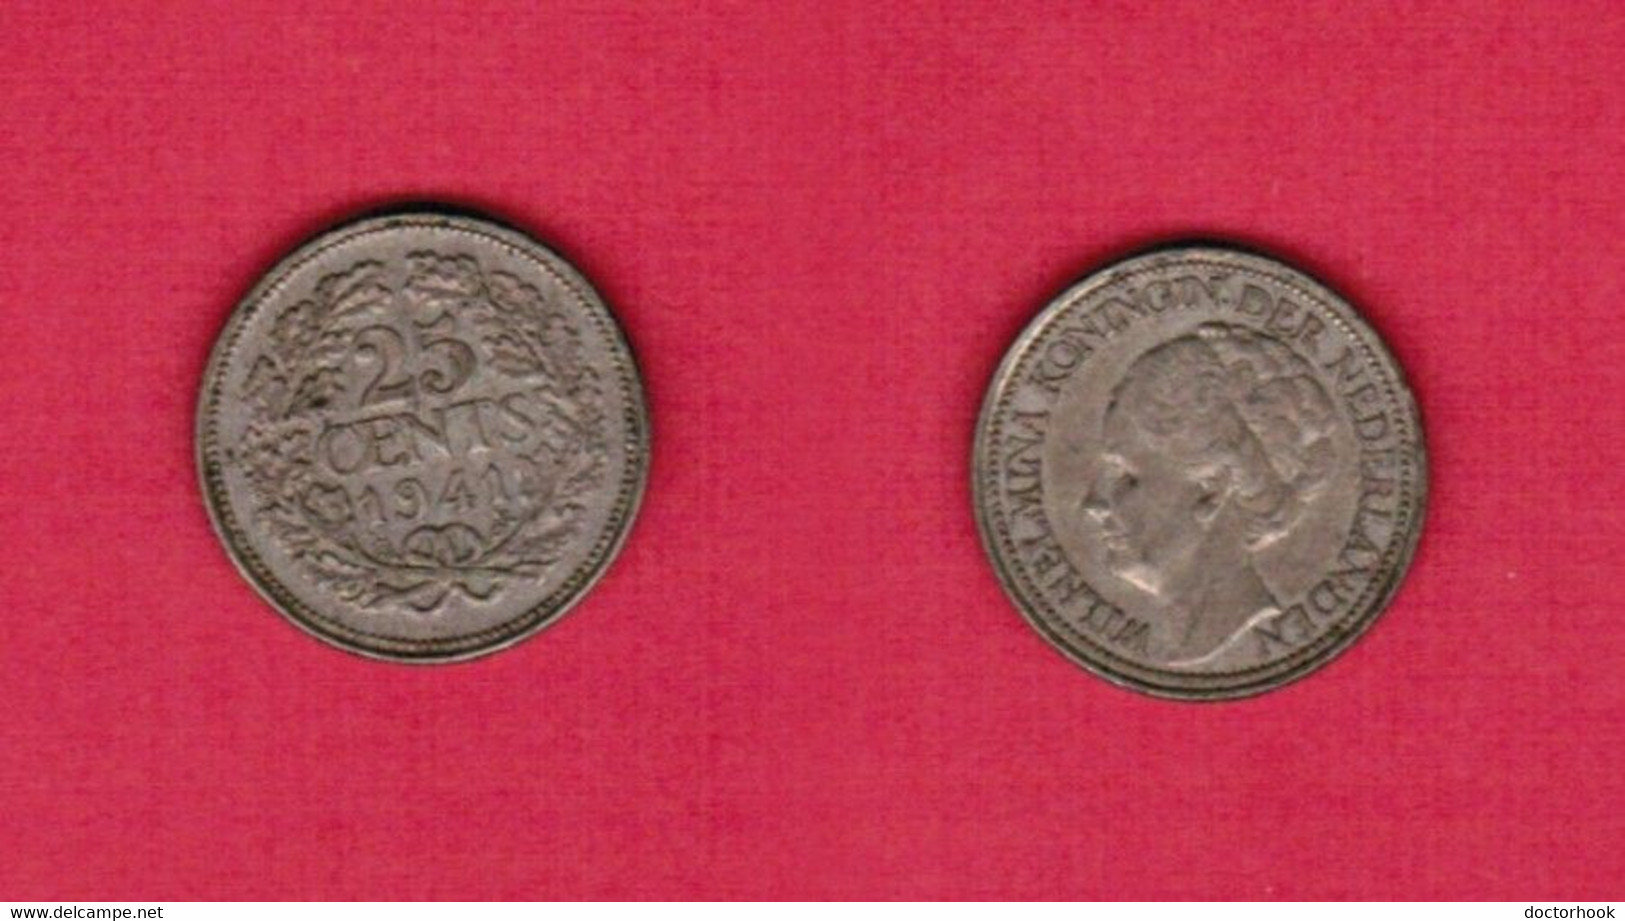 NETHERLANDS  25 CENTS SILVER 1941 (KM # 164) #6364 - 25 Cent